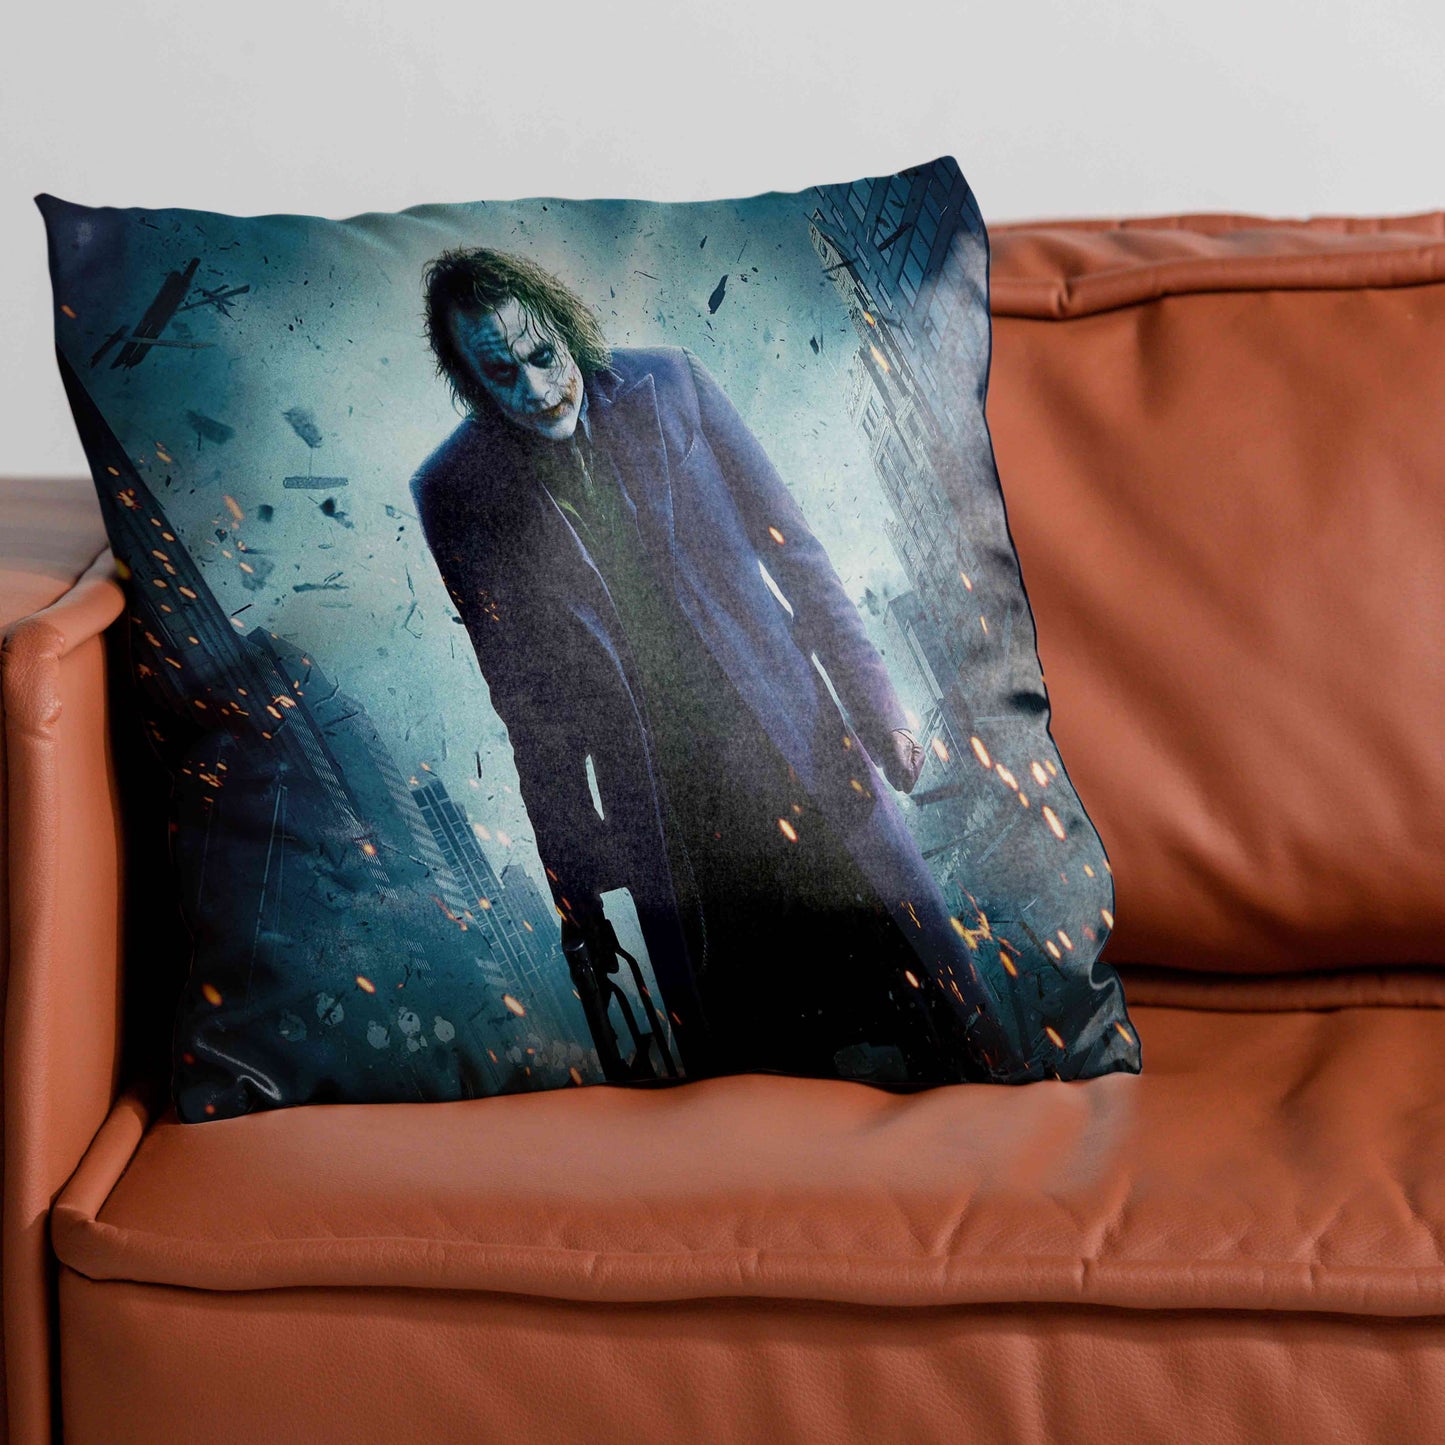 Joker's War Cushion Cover Trendy Home